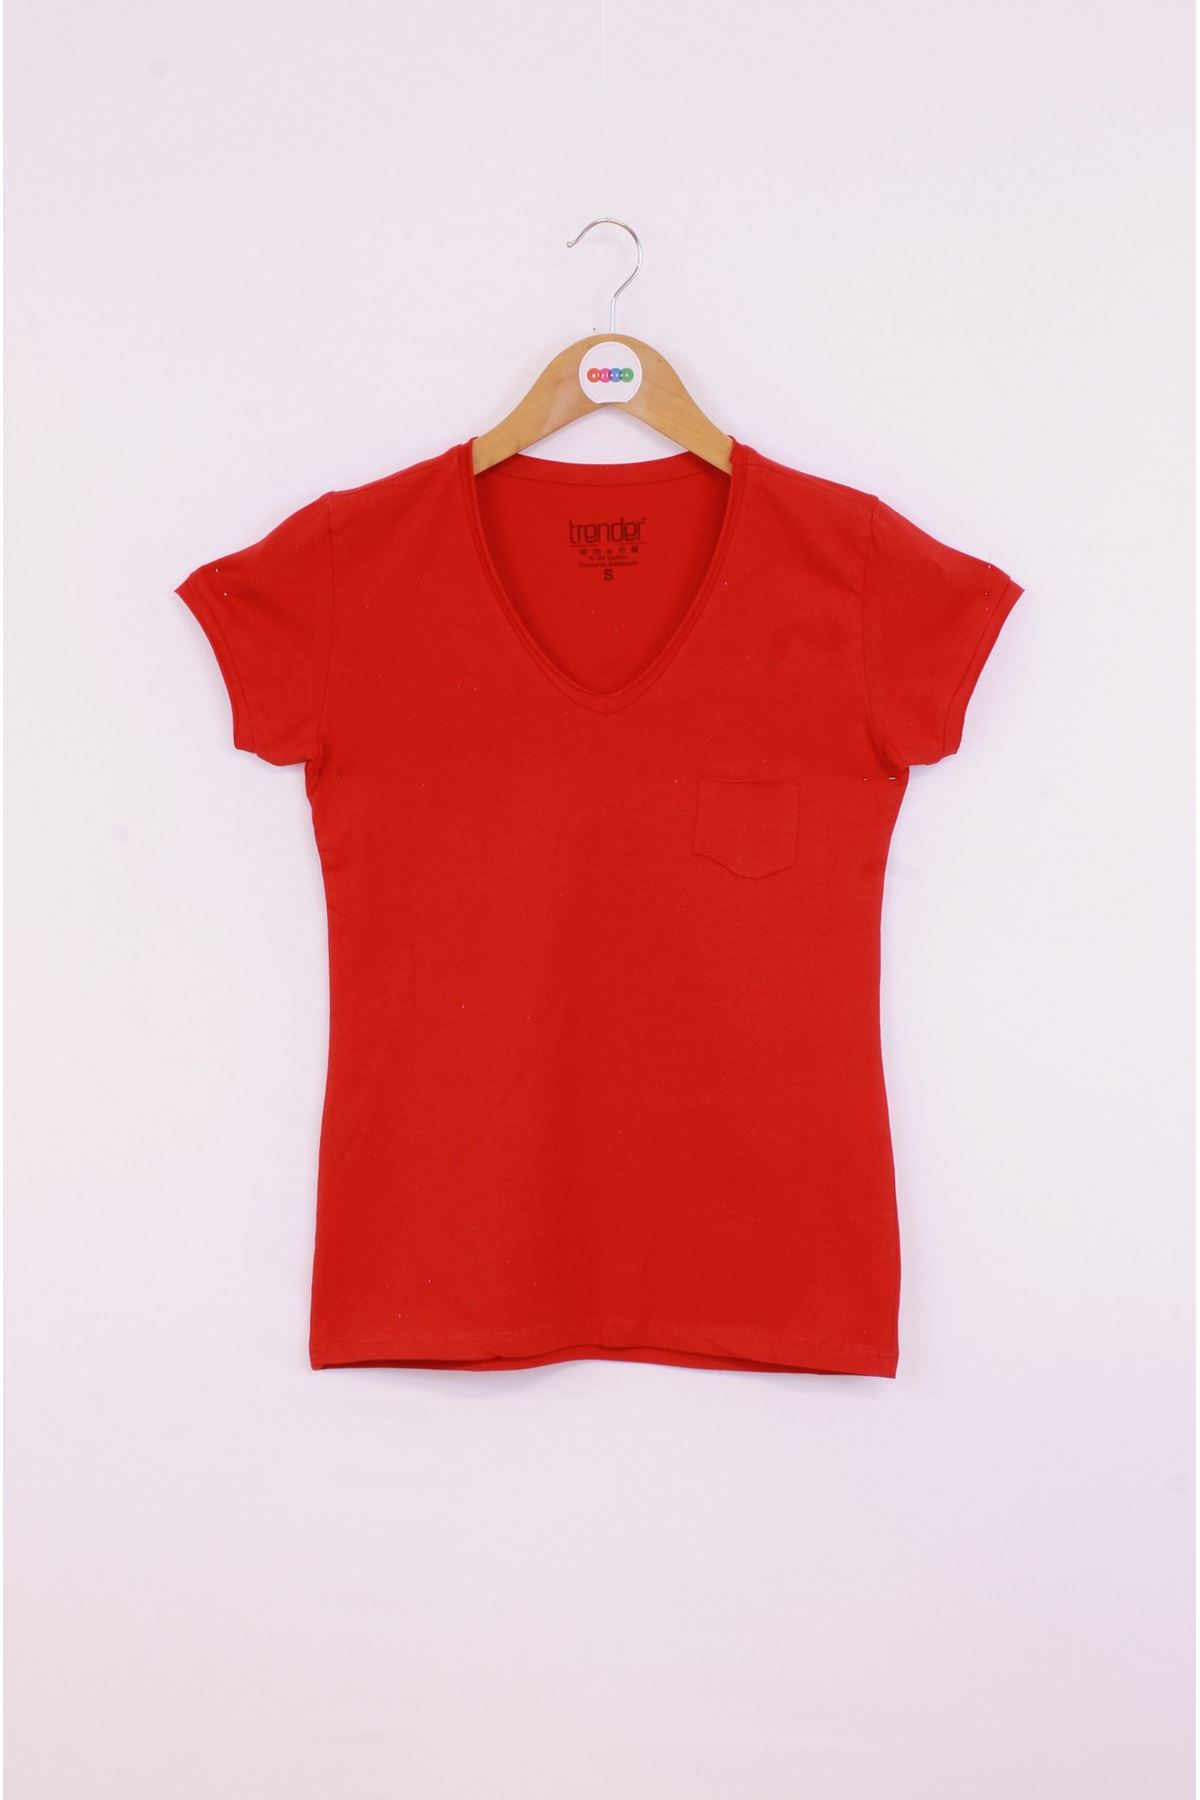 Giyinsen Kadın Kırmızı Tişört - 23YL71595004